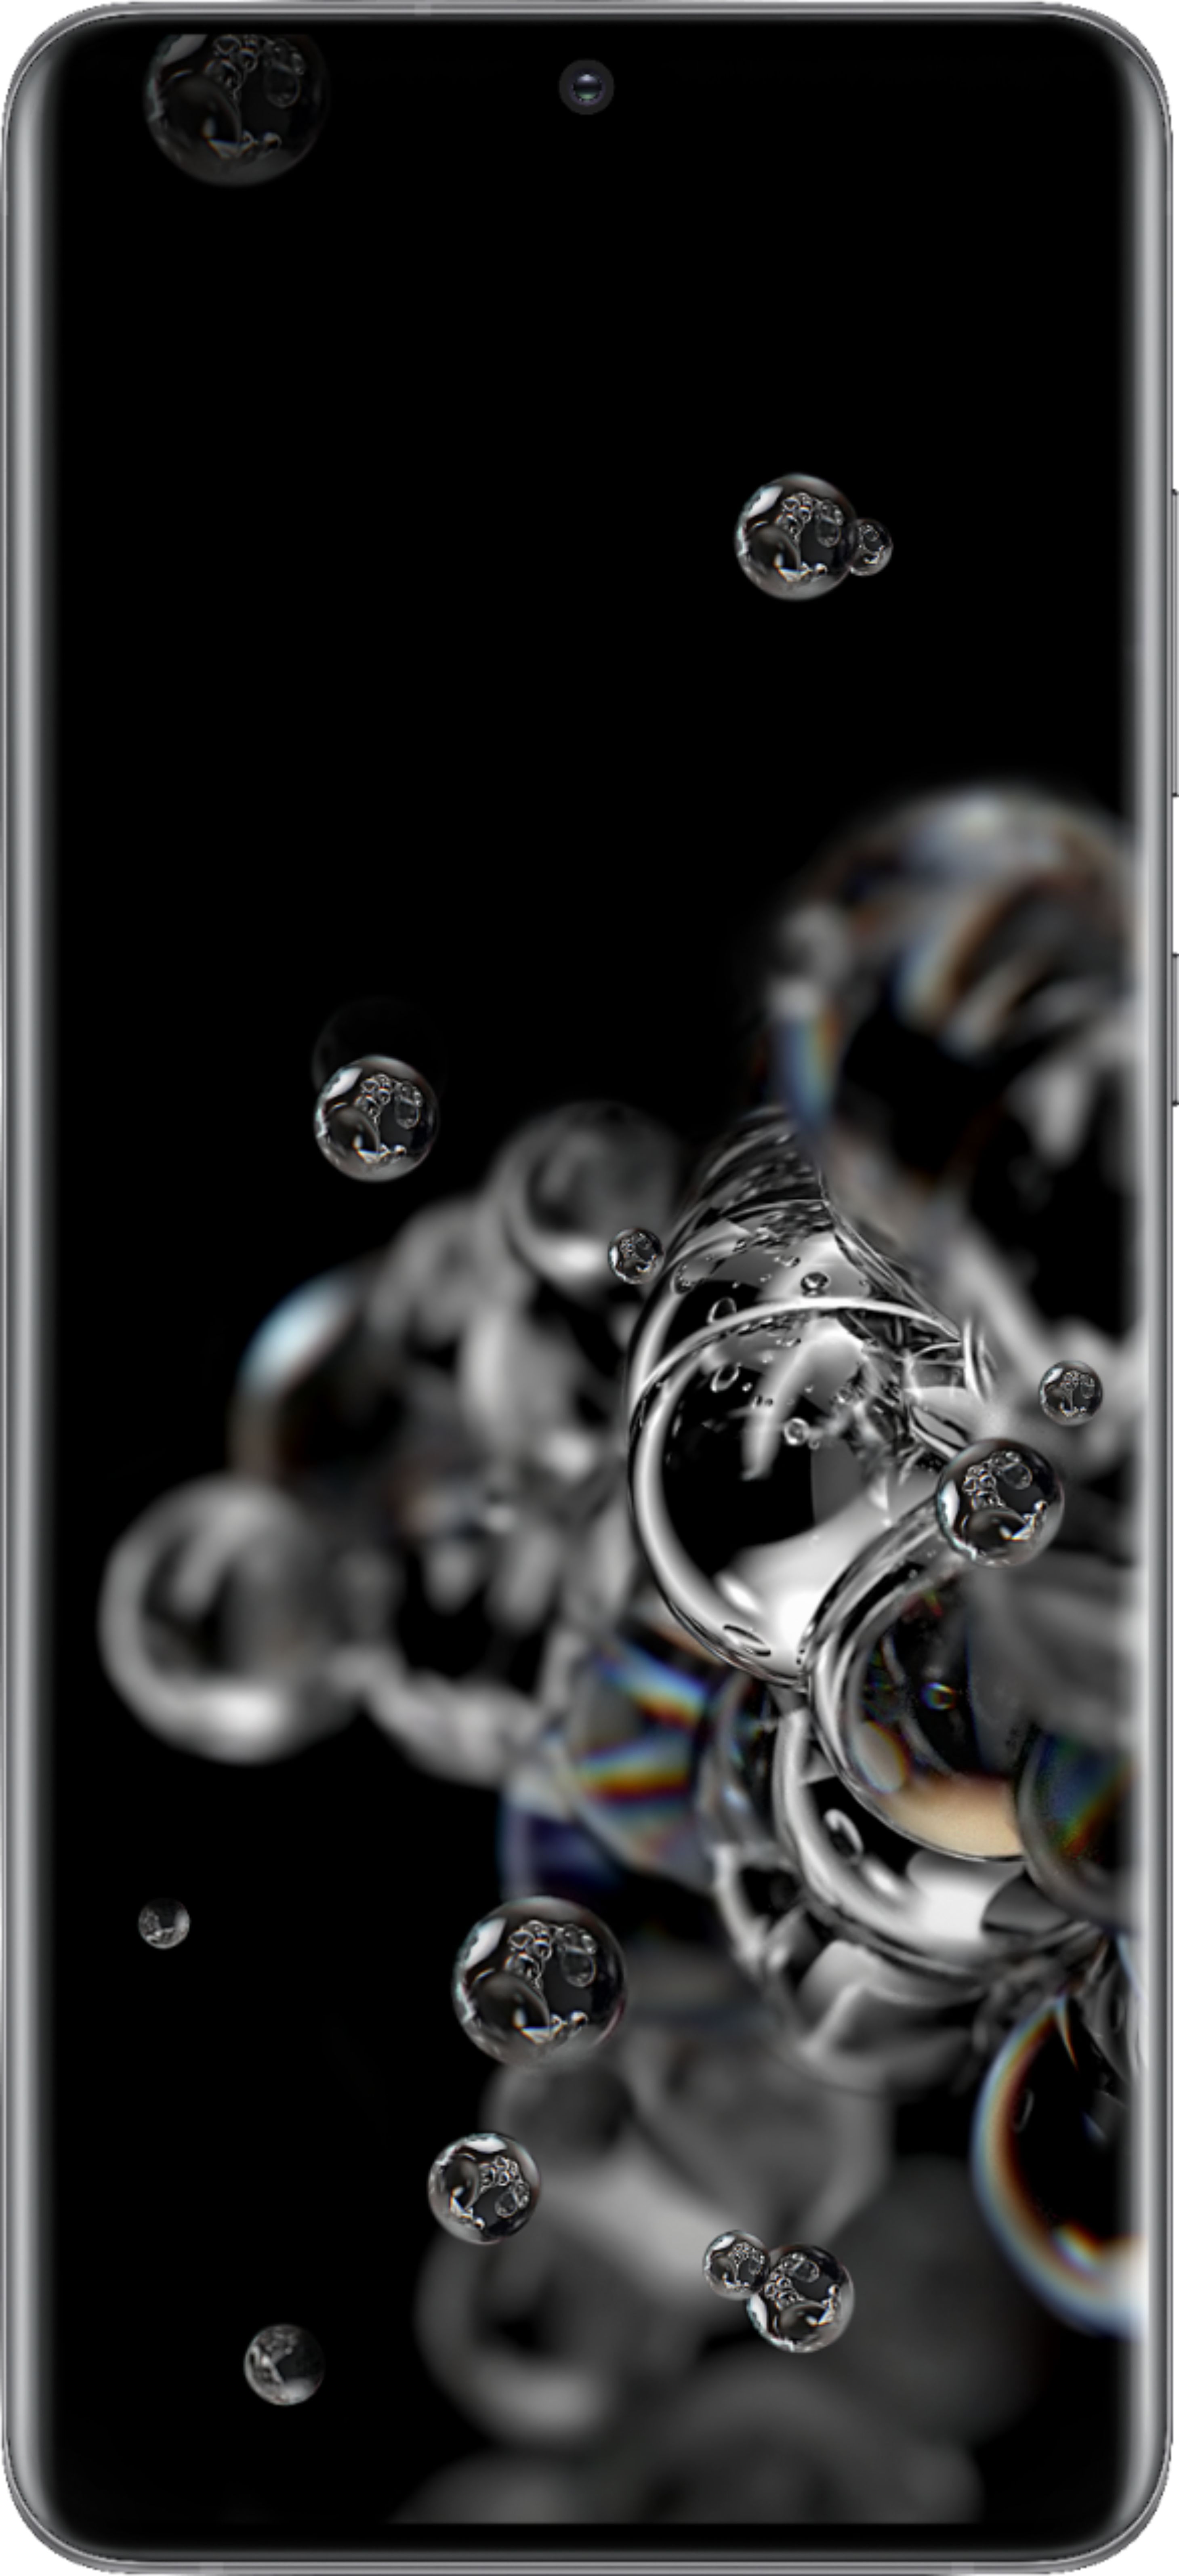 Samsung Galaxy S20 Ultra - $300 off plus Possible $200 via price match (YMMV)